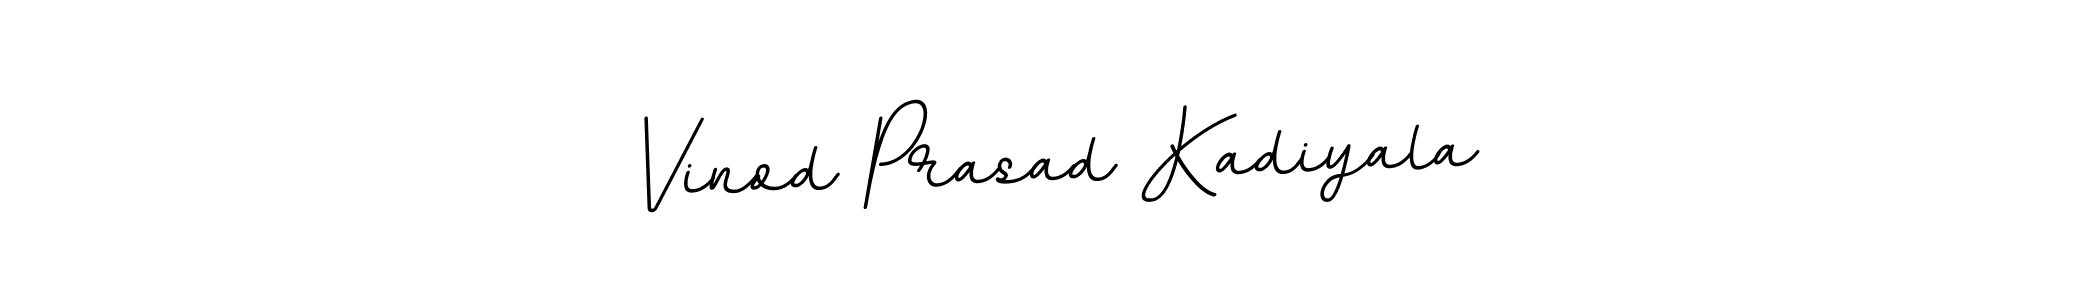 Vinod Prasad Kadiyala stylish signature style. Best Handwritten Sign (BallpointsItalic-DORy9) for my name. Handwritten Signature Collection Ideas for my name Vinod Prasad Kadiyala. Vinod Prasad Kadiyala signature style 11 images and pictures png